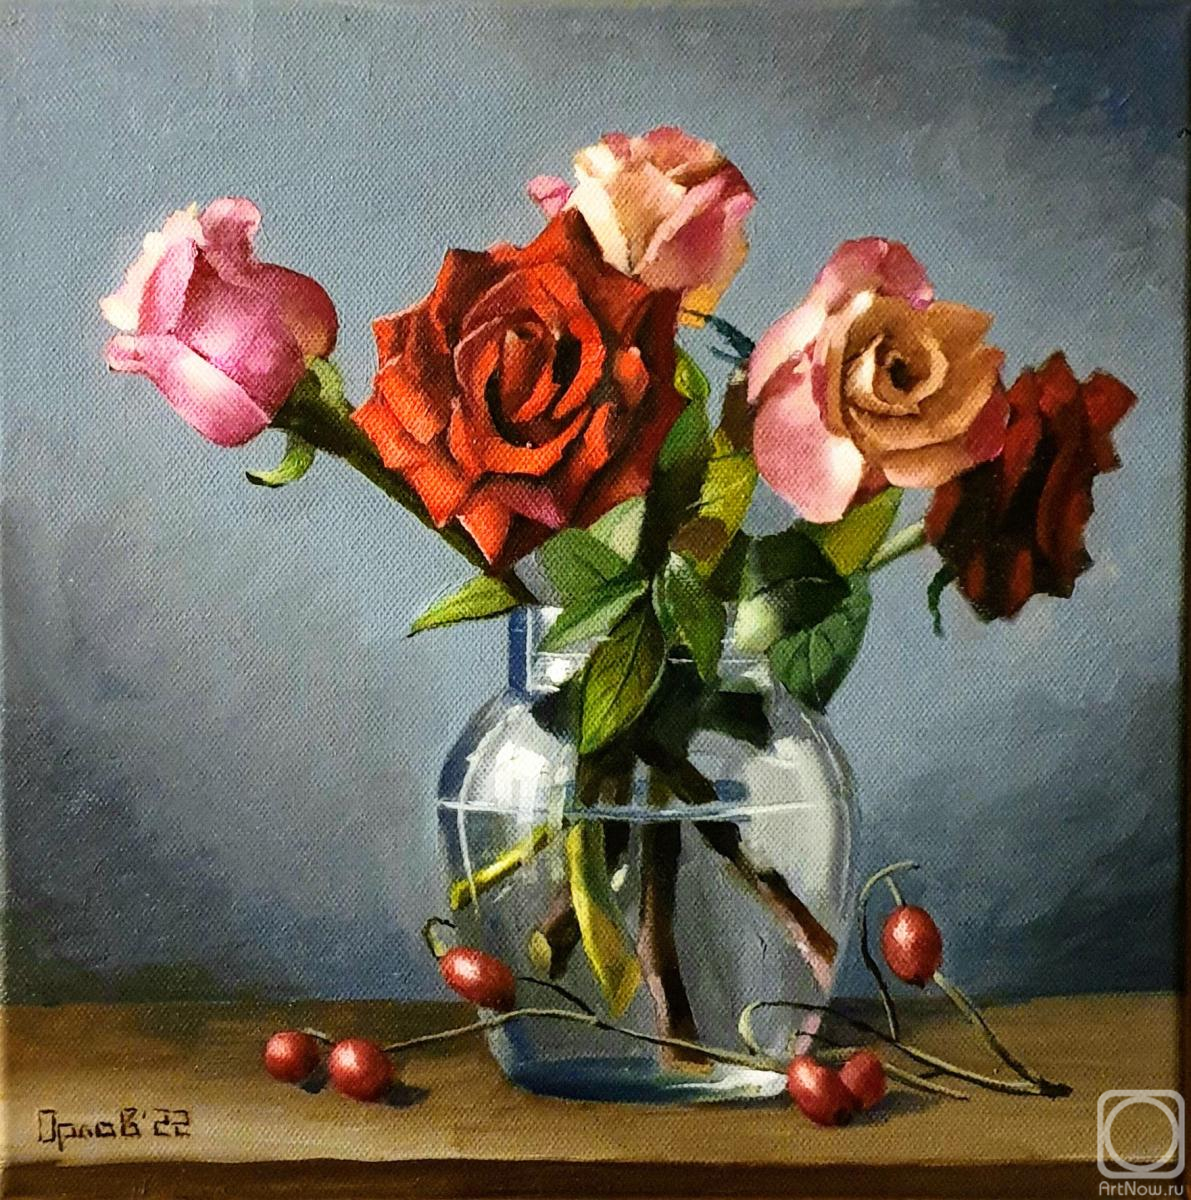 Orlov Ilya. Bouquet of roses